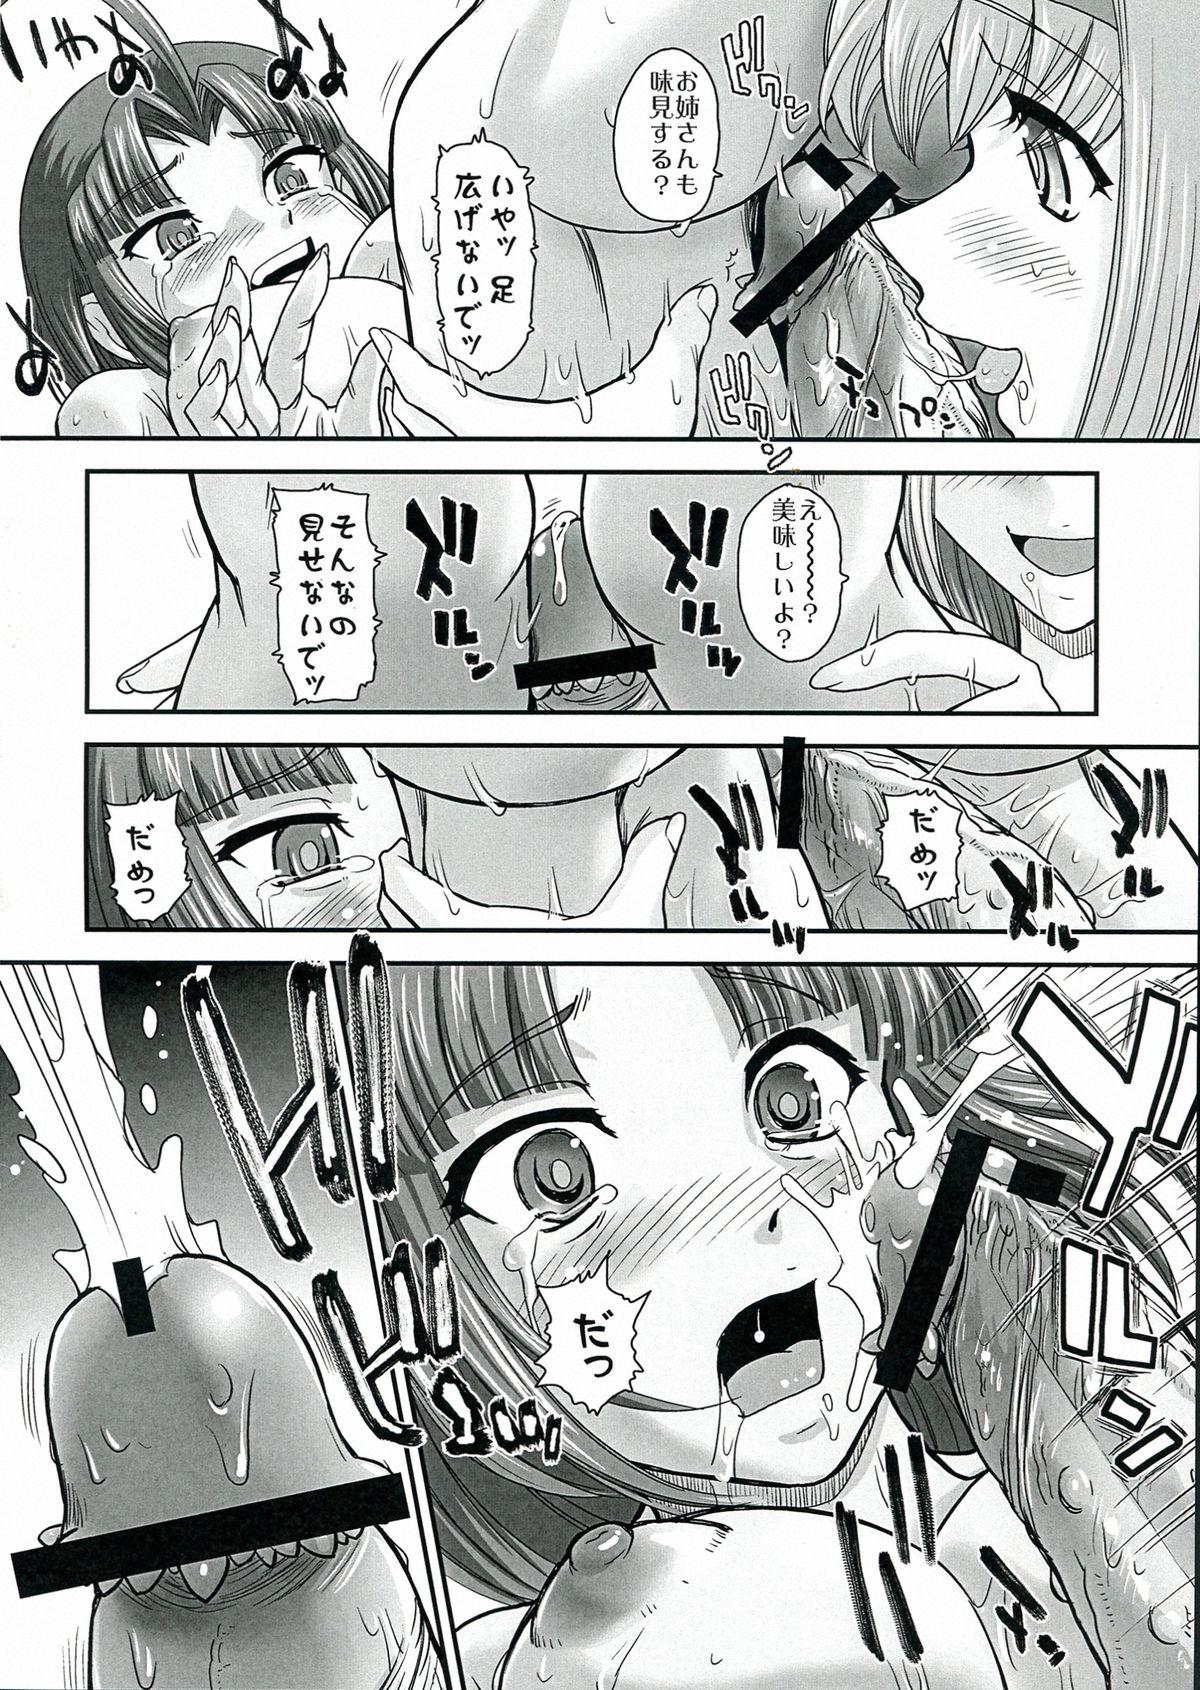 Gape BehindMoon Recycle 3 - Space battleship yamato Secret - Page 10